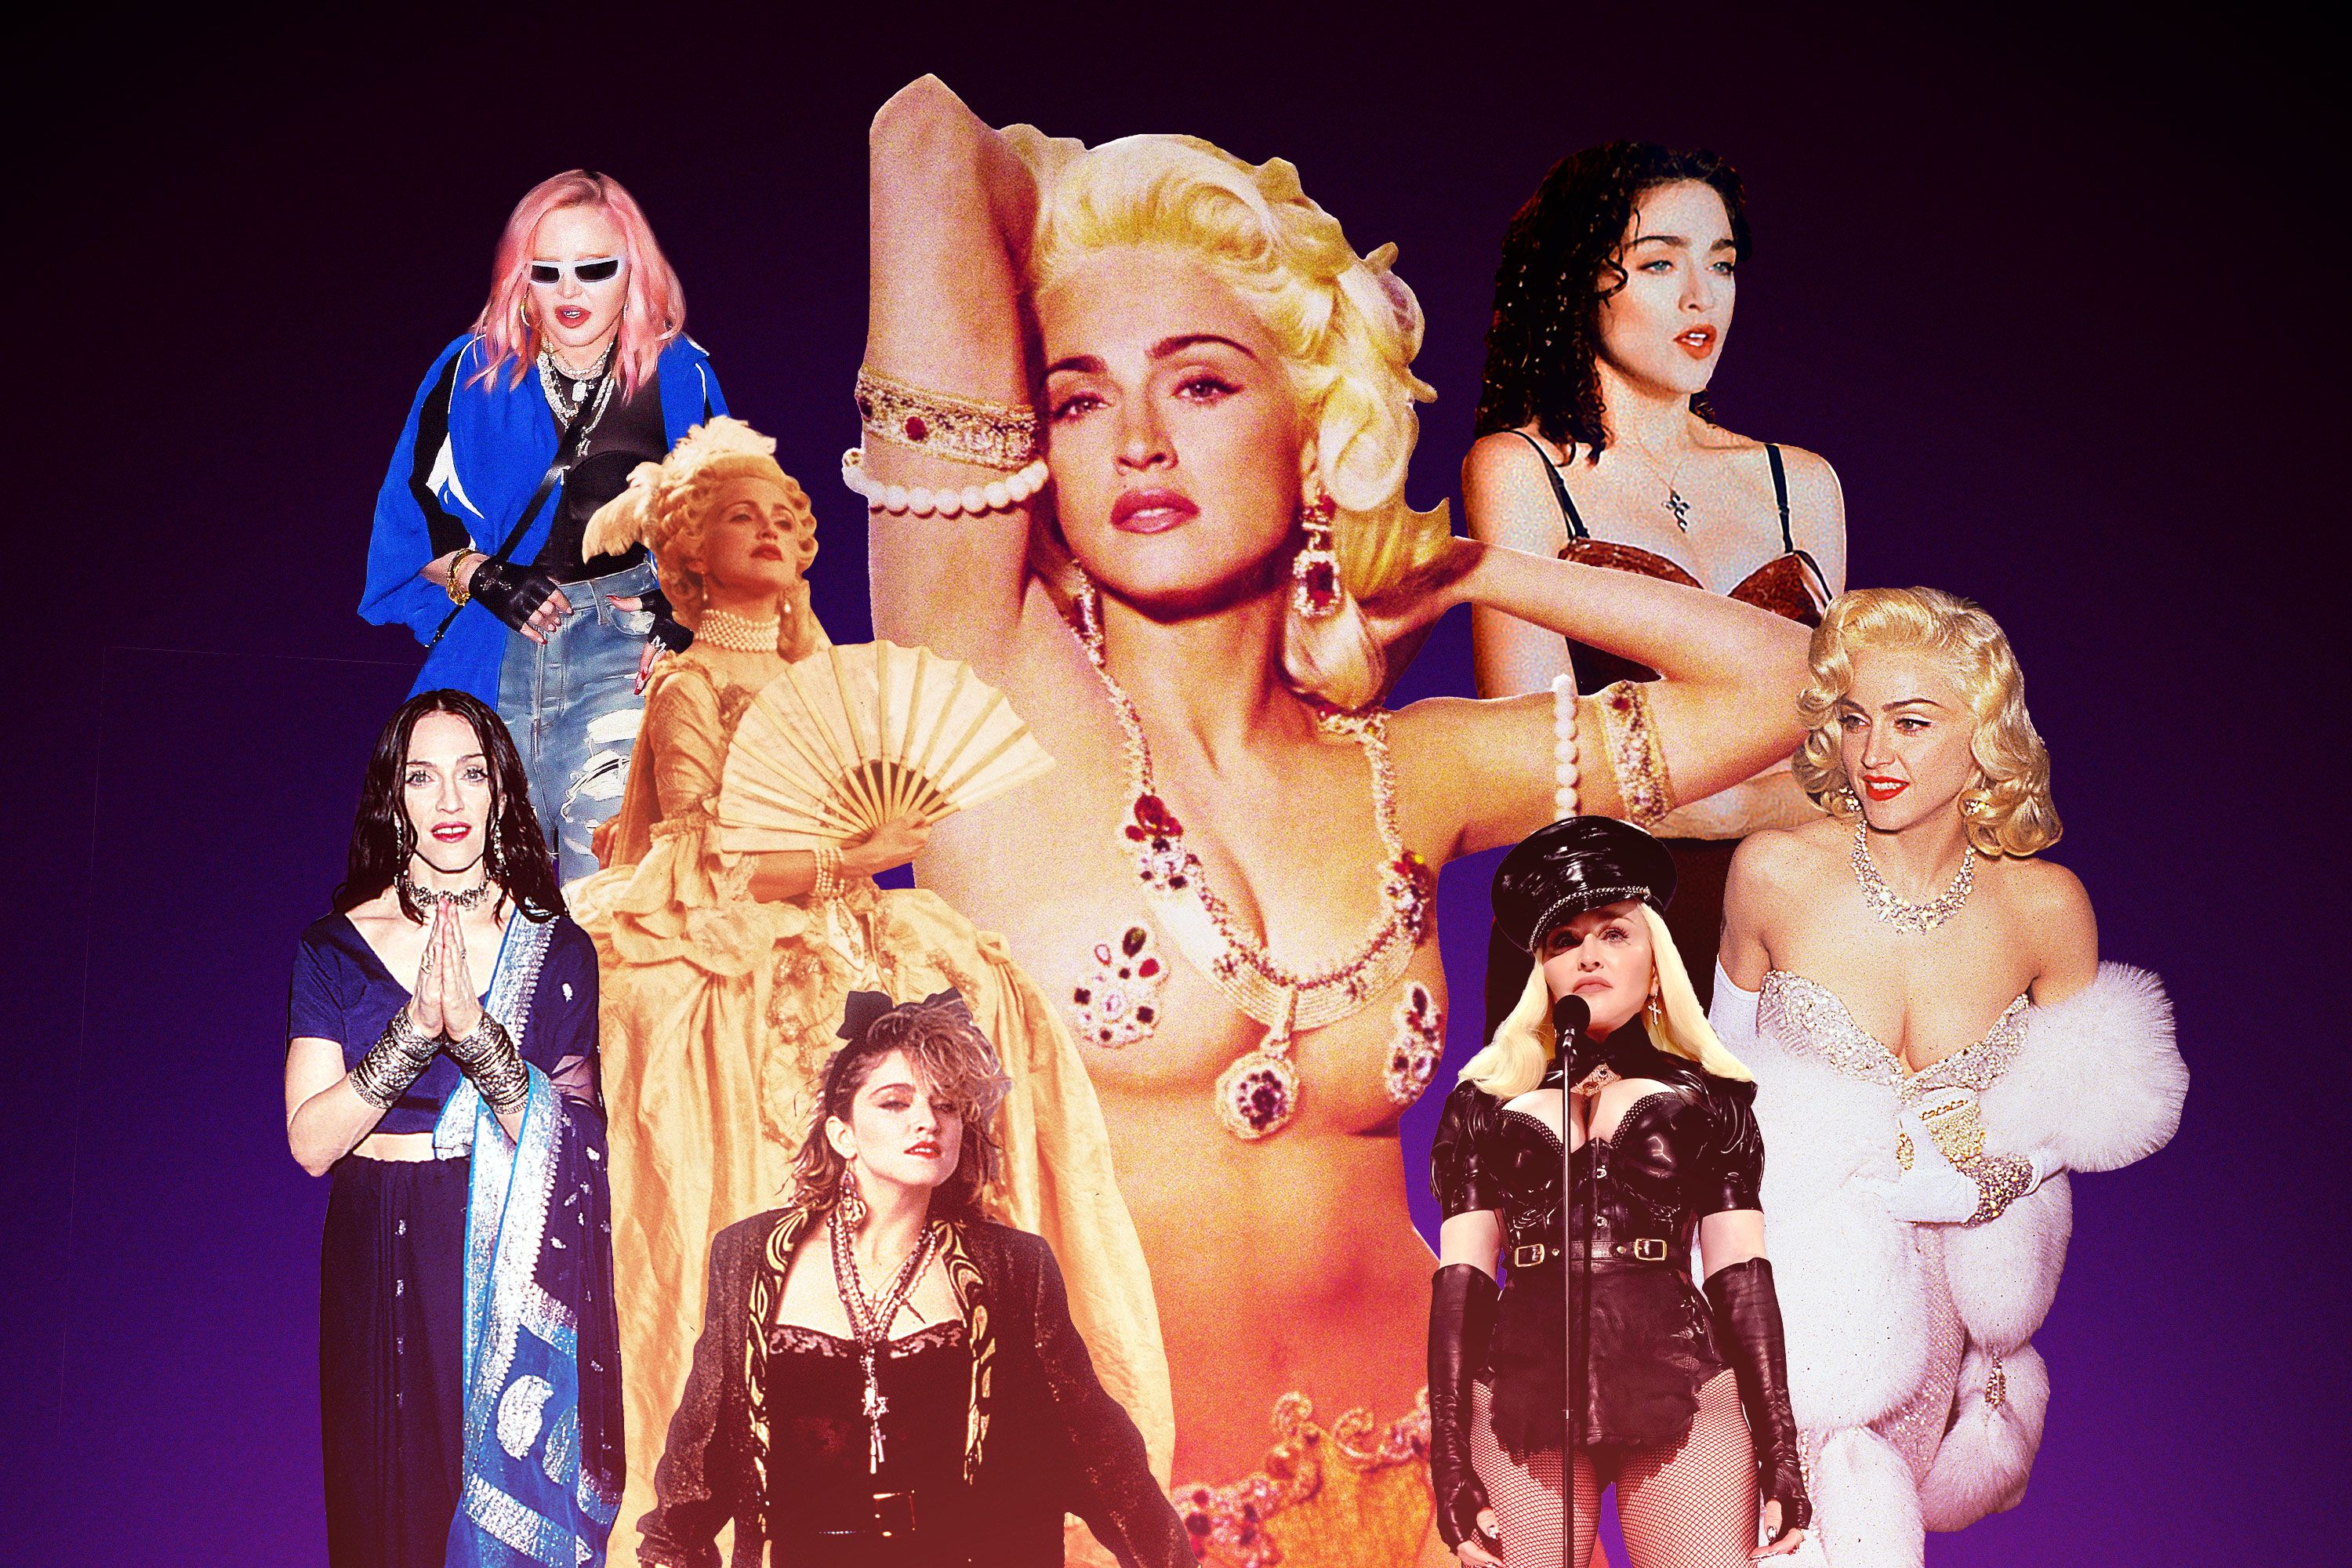 Valu Ki Girl Xxx - Making Up Madonna: A Taxonomy of the Pop Star's Personas